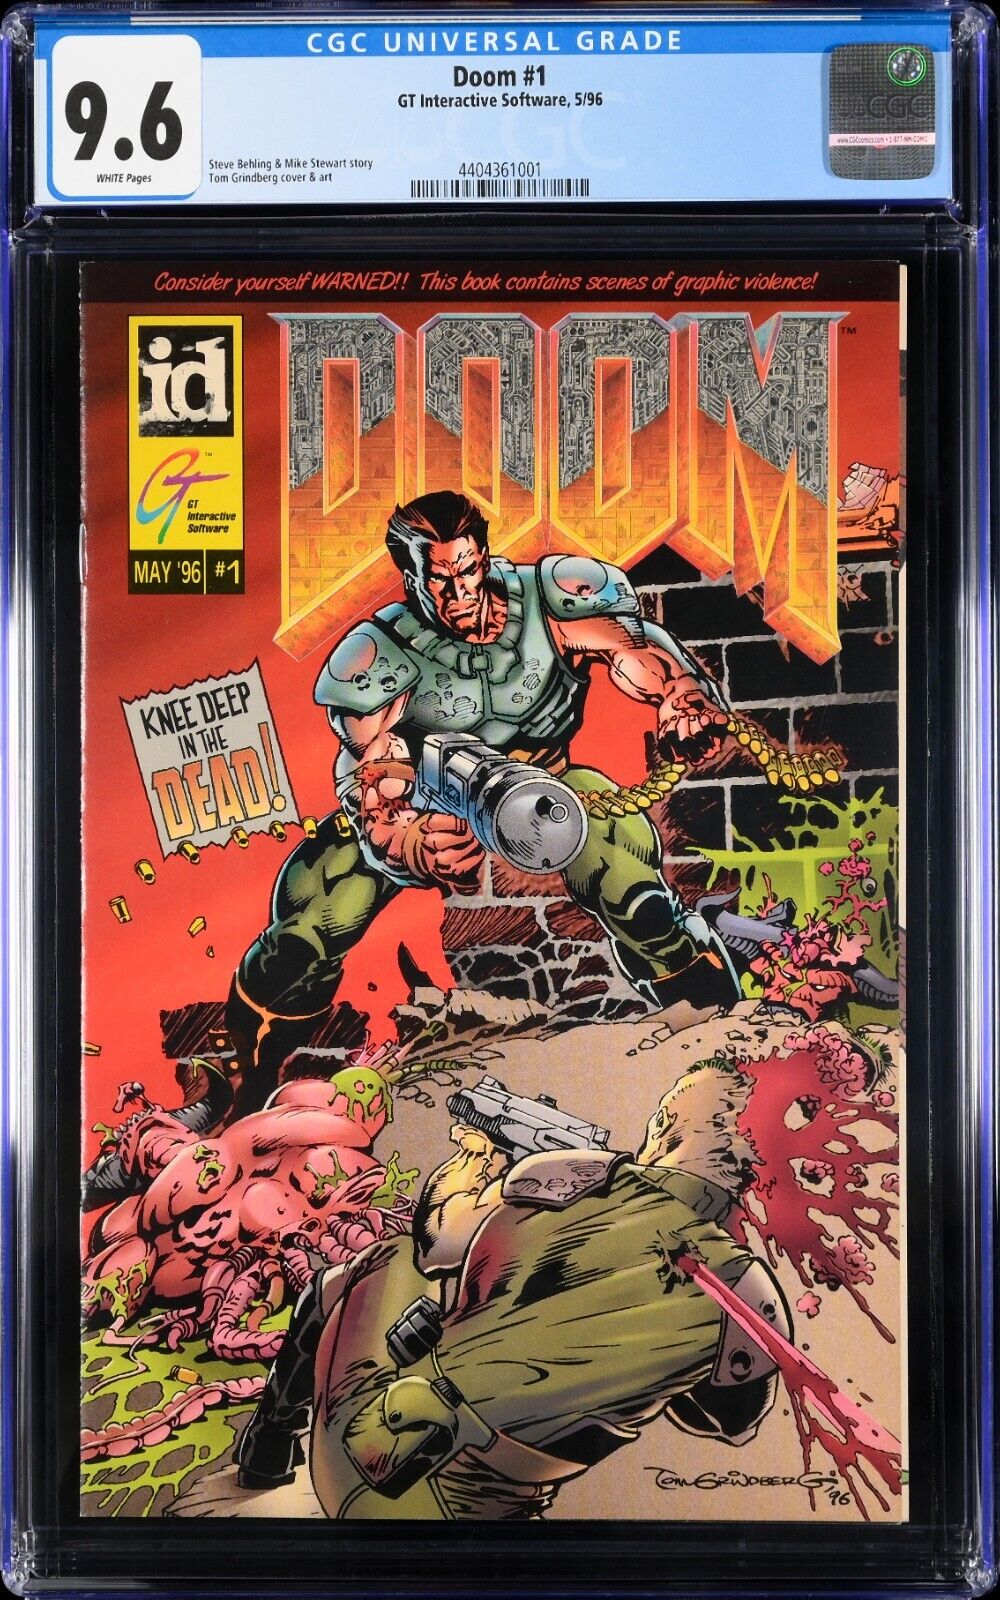 Doom #1 - GT Interactive - 1996 - Convention Exclusive Variant - Rare - Scarce 2